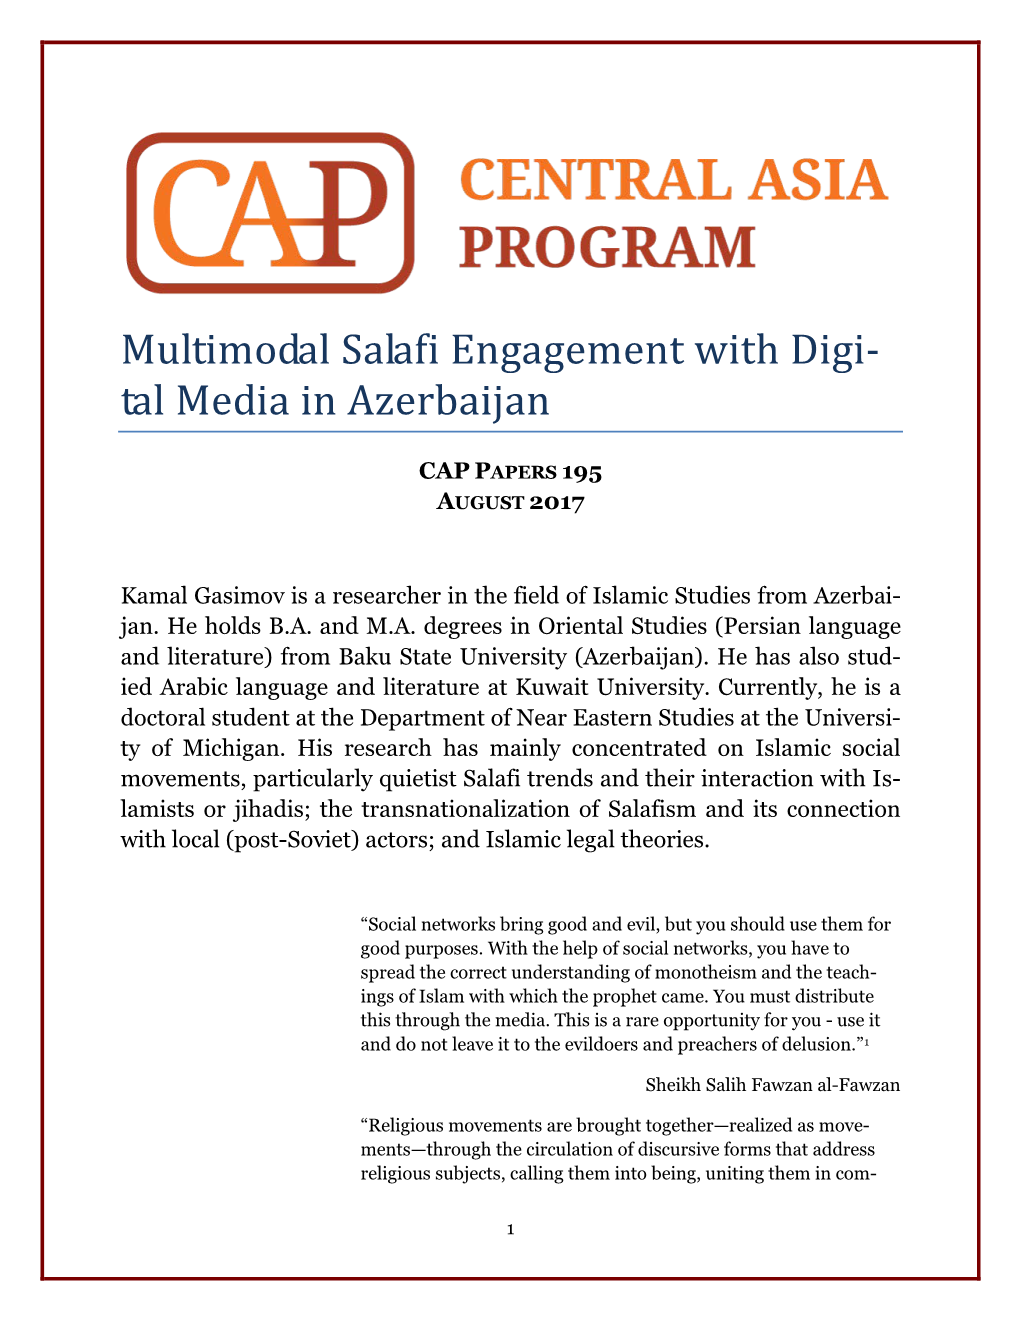 Multimodal Salafi Engagement with Digi- Tal Media in Azerbaijan